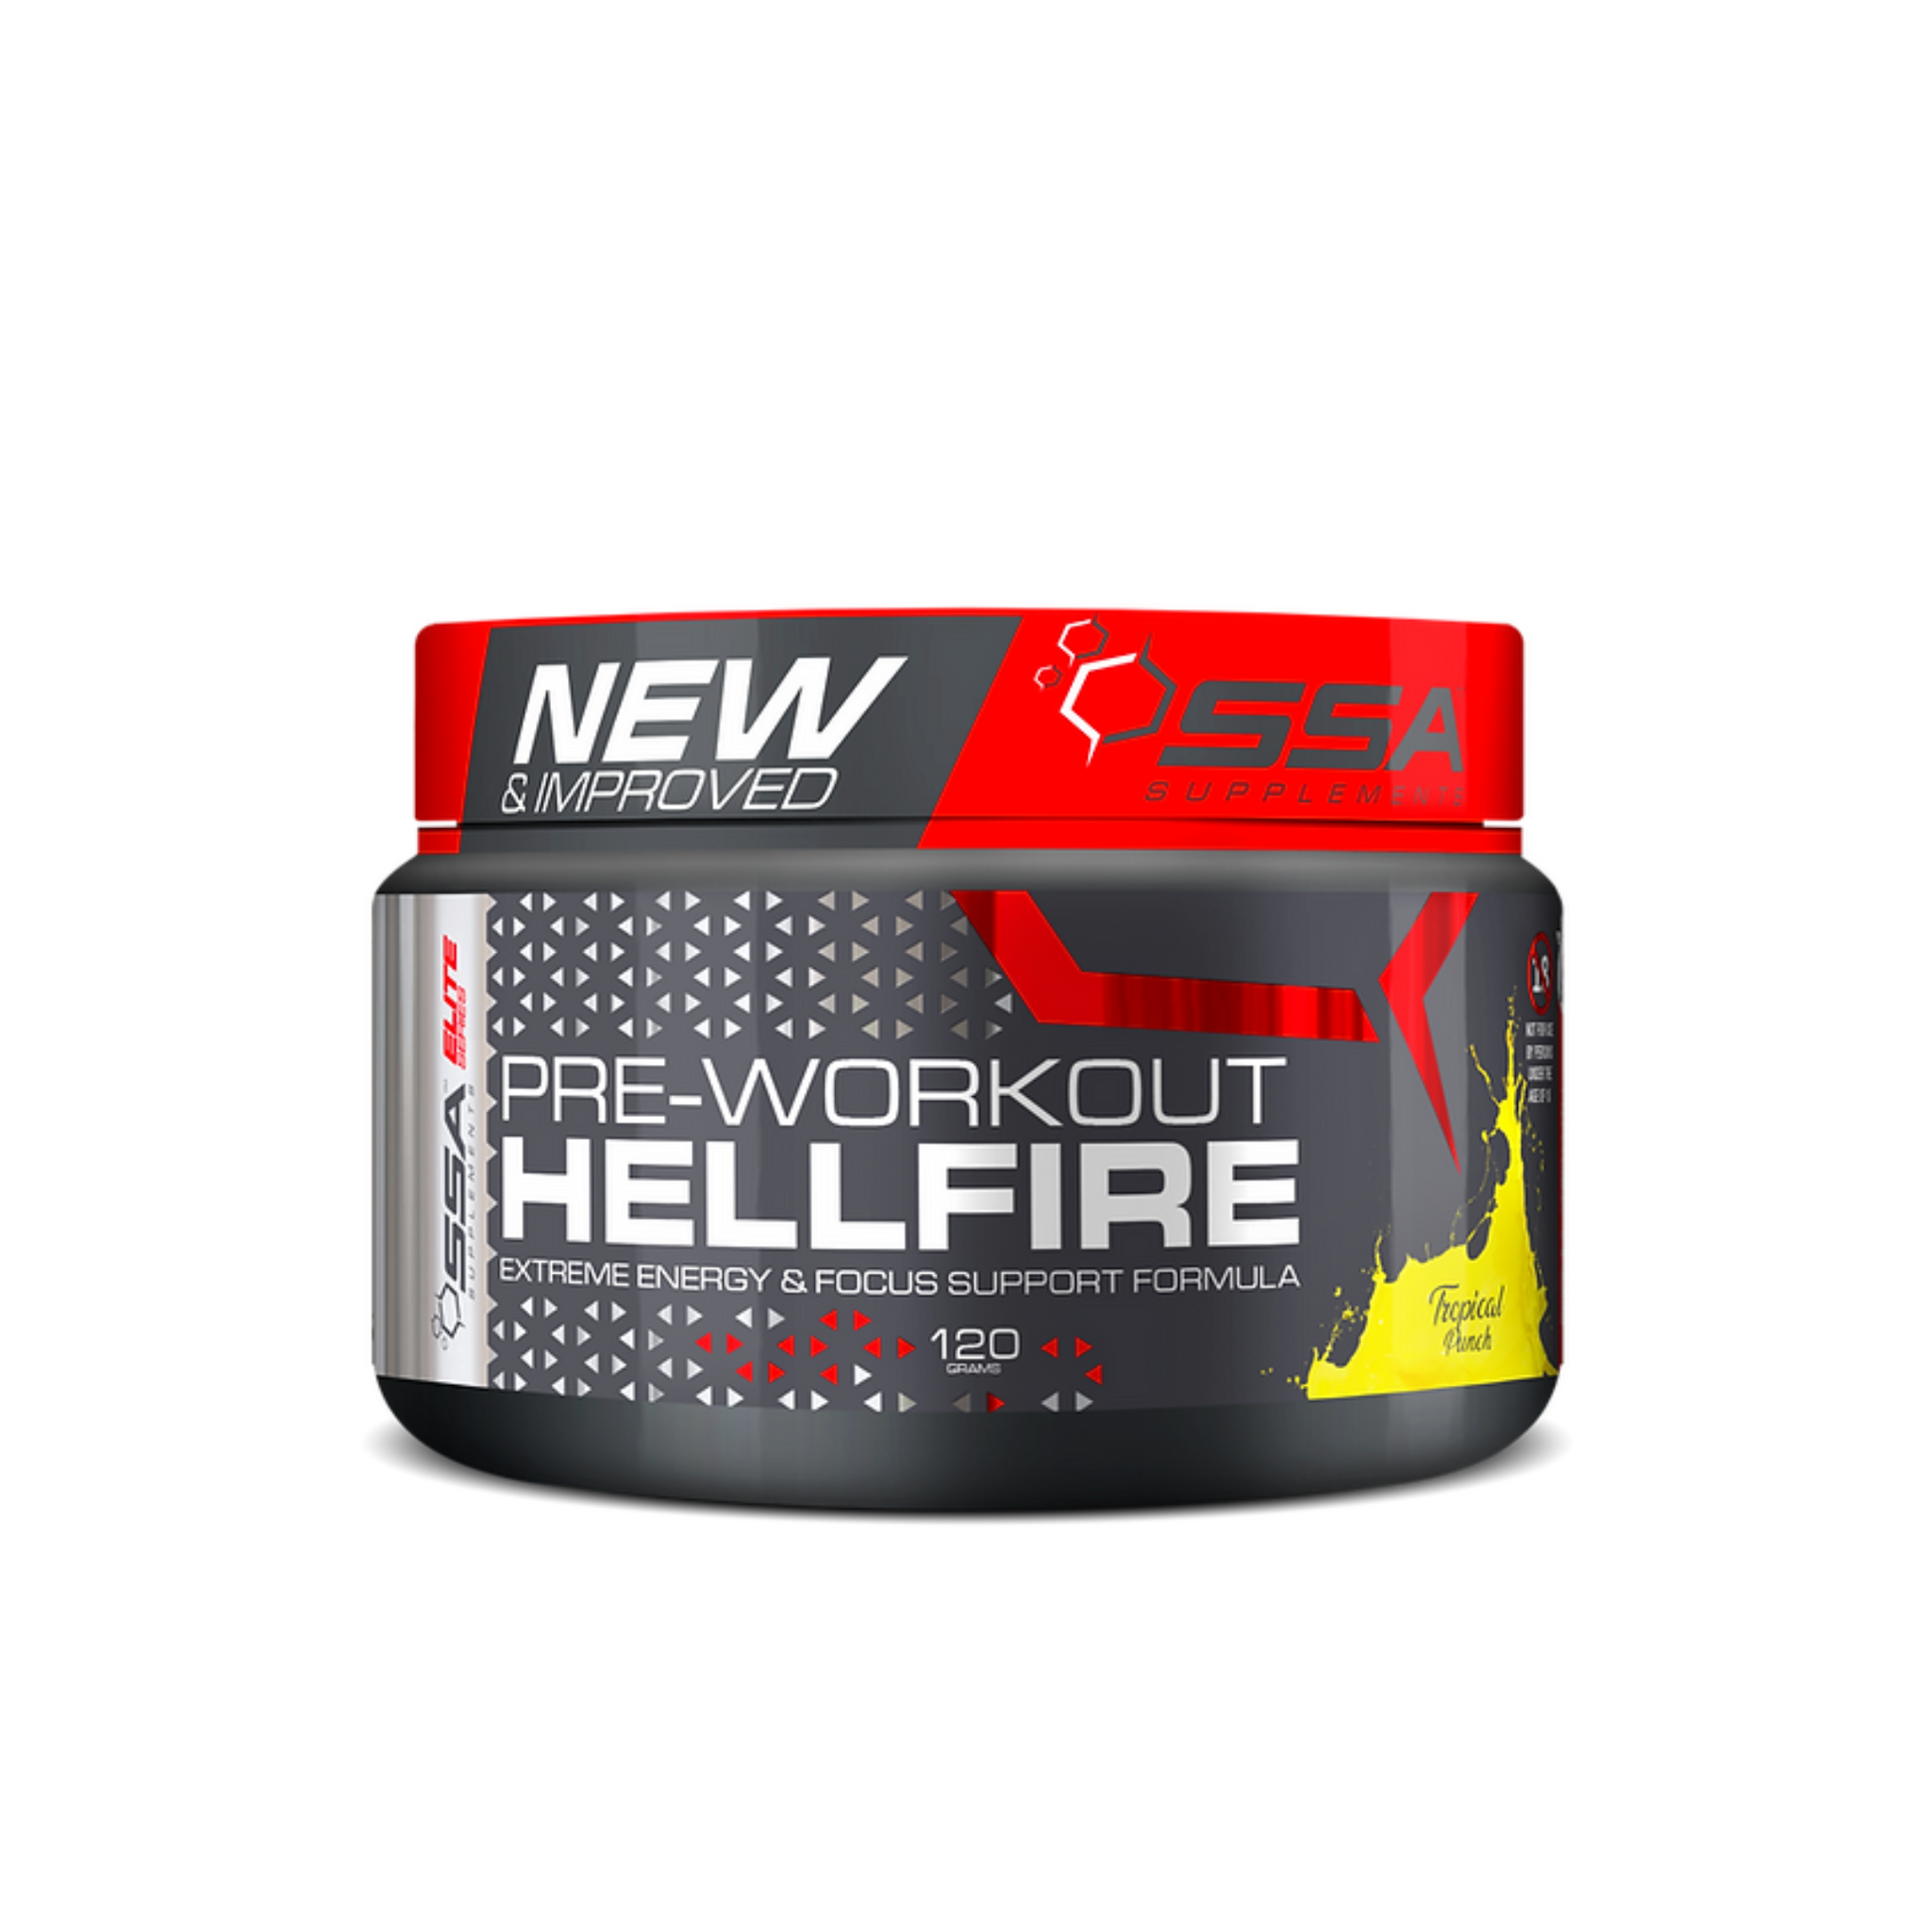 SSA SUPPLEMENTS Hellfire Original Pre Workout Energy Booster – P21